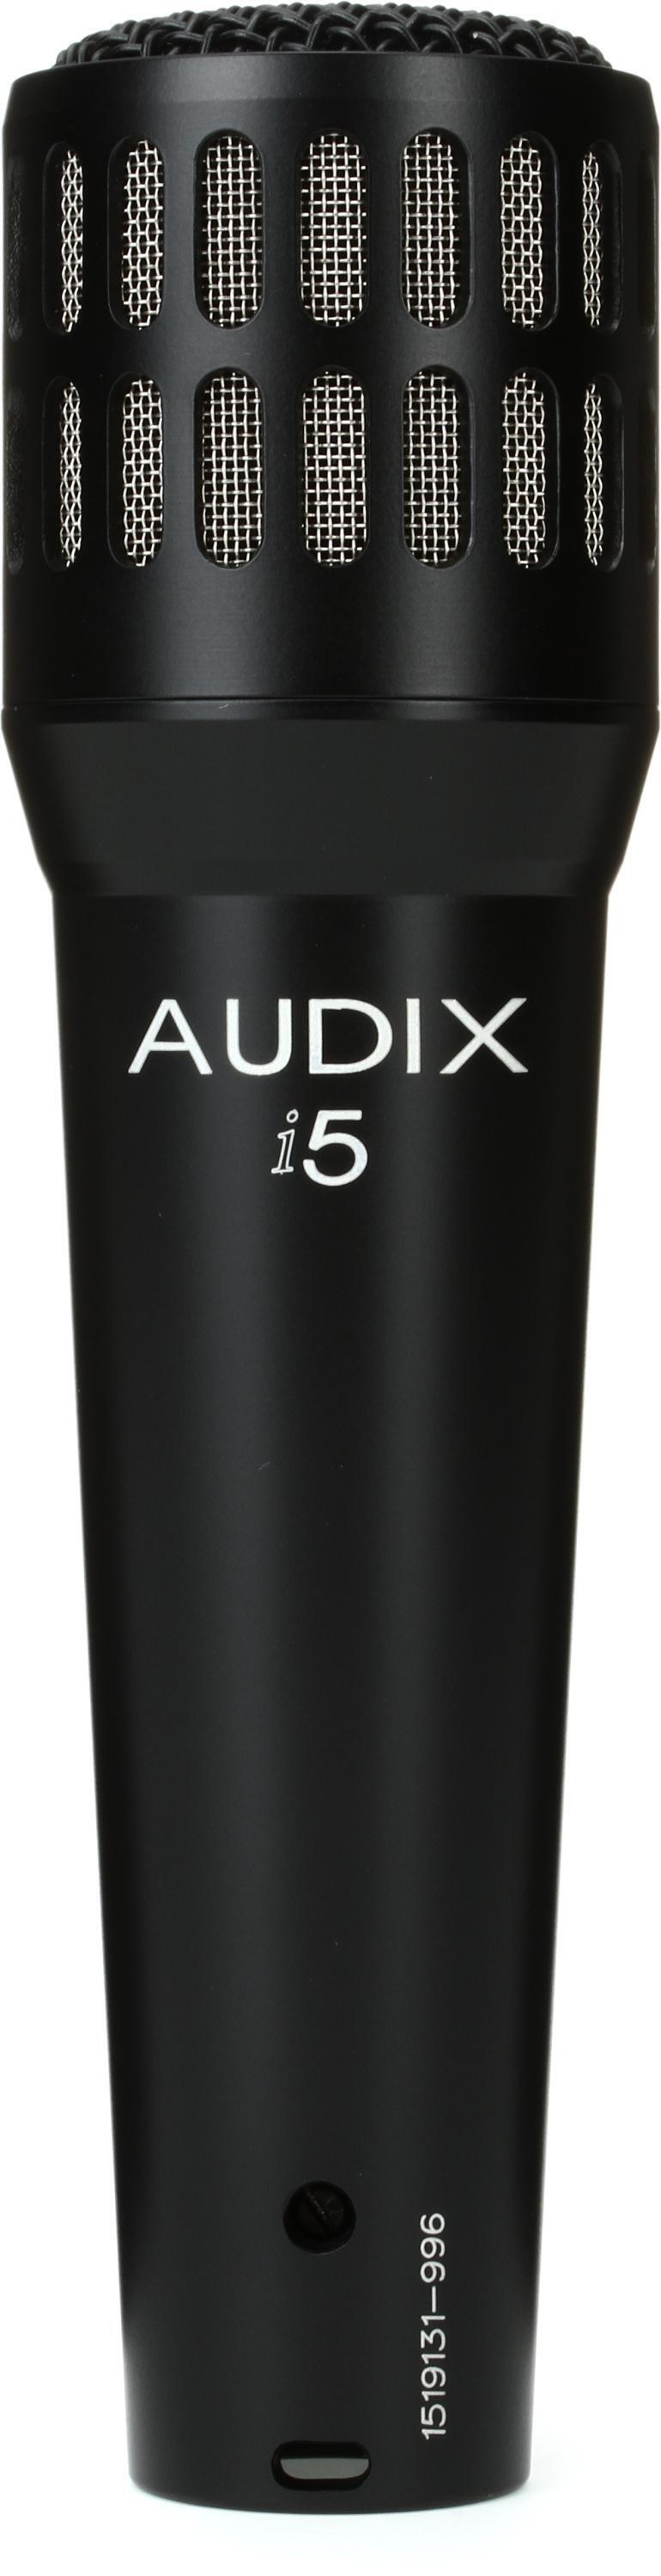 Bundled Item: Audix i5 Cardioid Dynamic Instrument Microphone